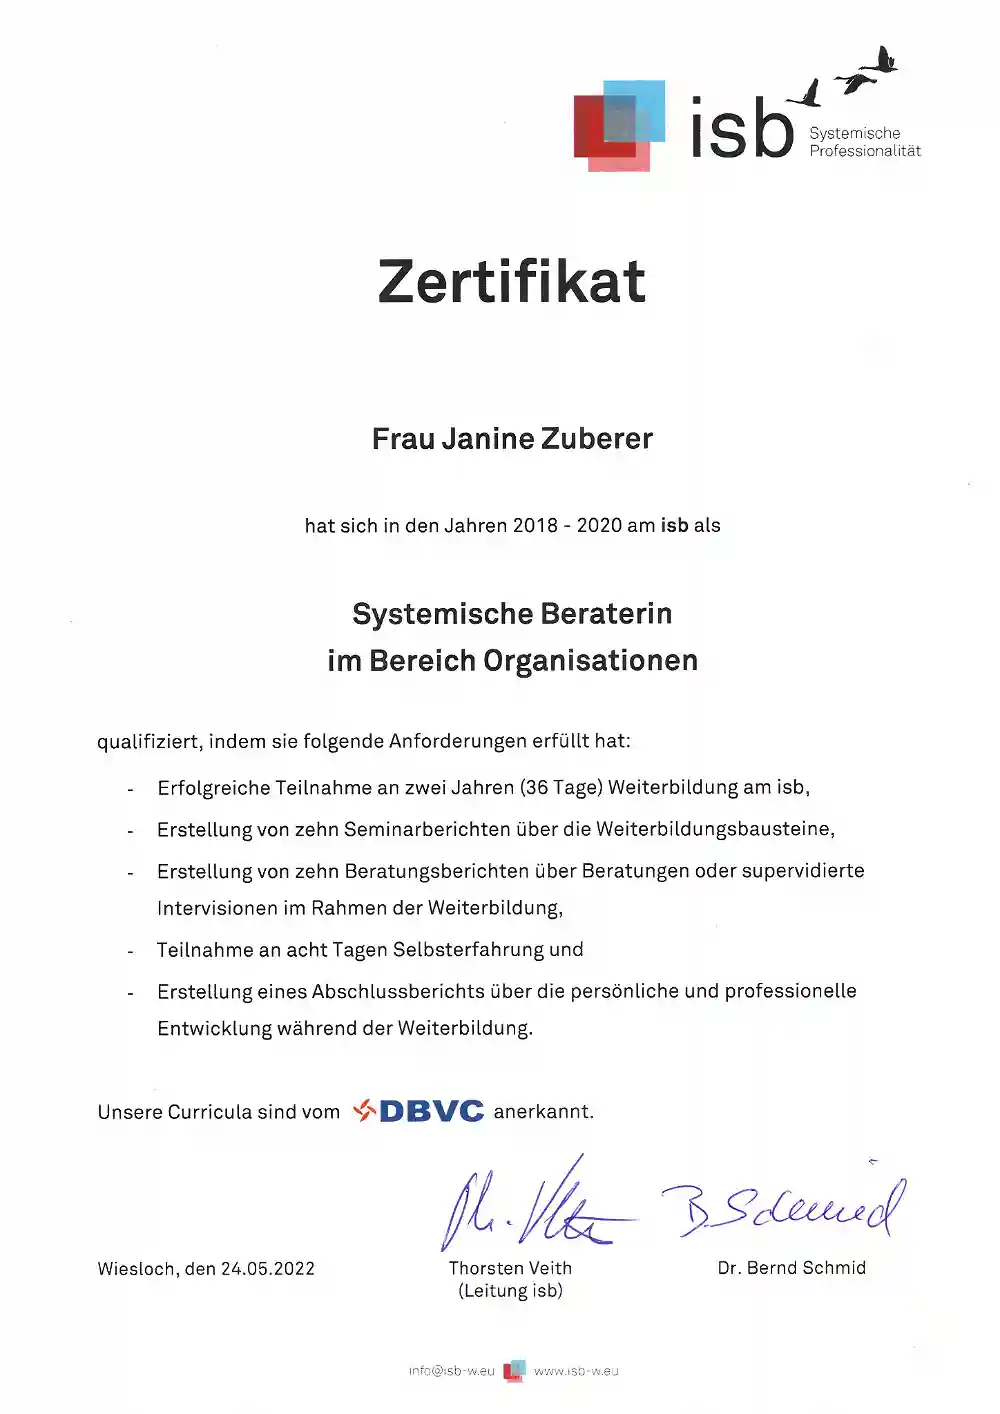 isb - zertifikat Janine Zuberer